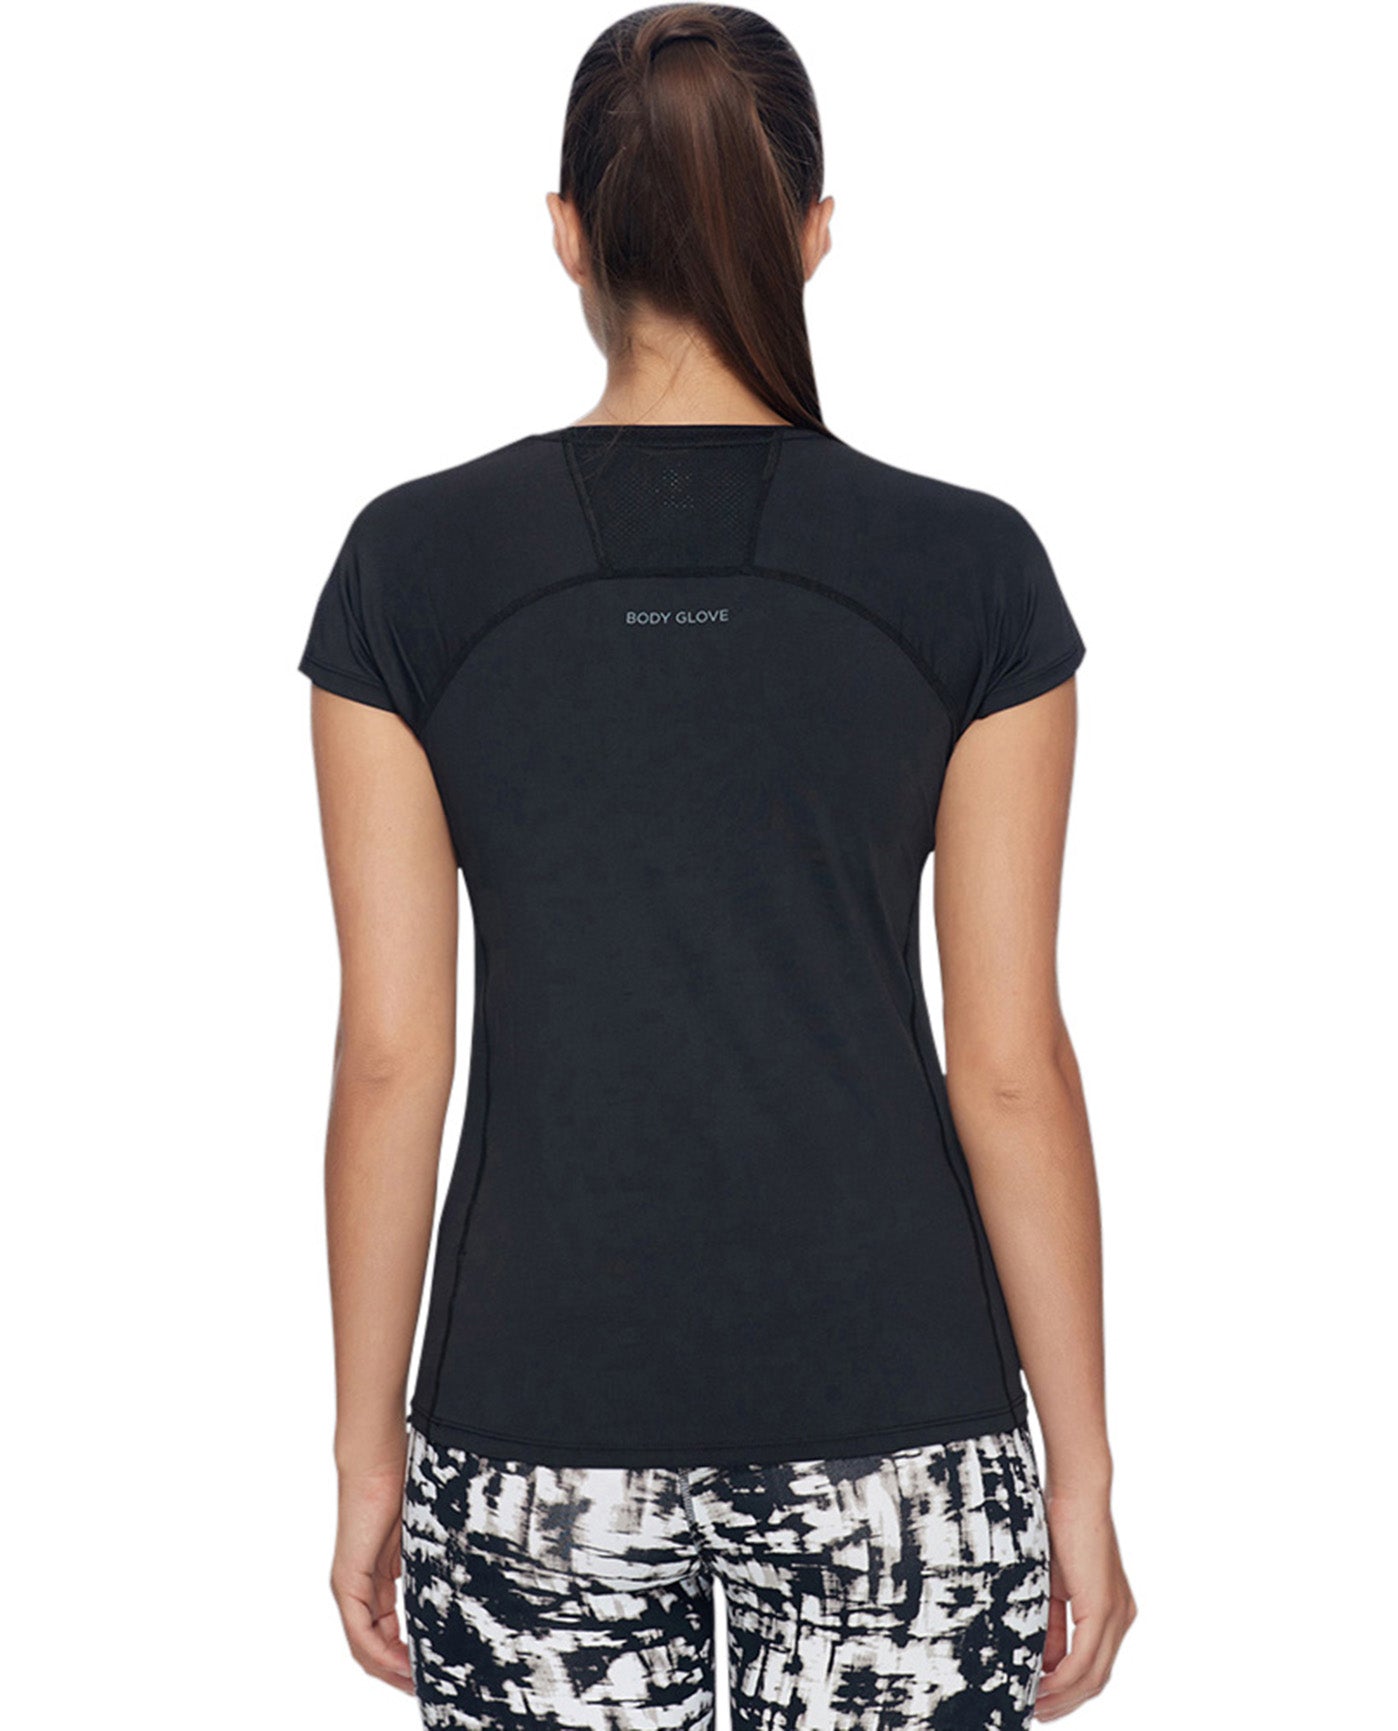 Back View Of Body Glove Sport Shamal T-Shirt | BGS Black